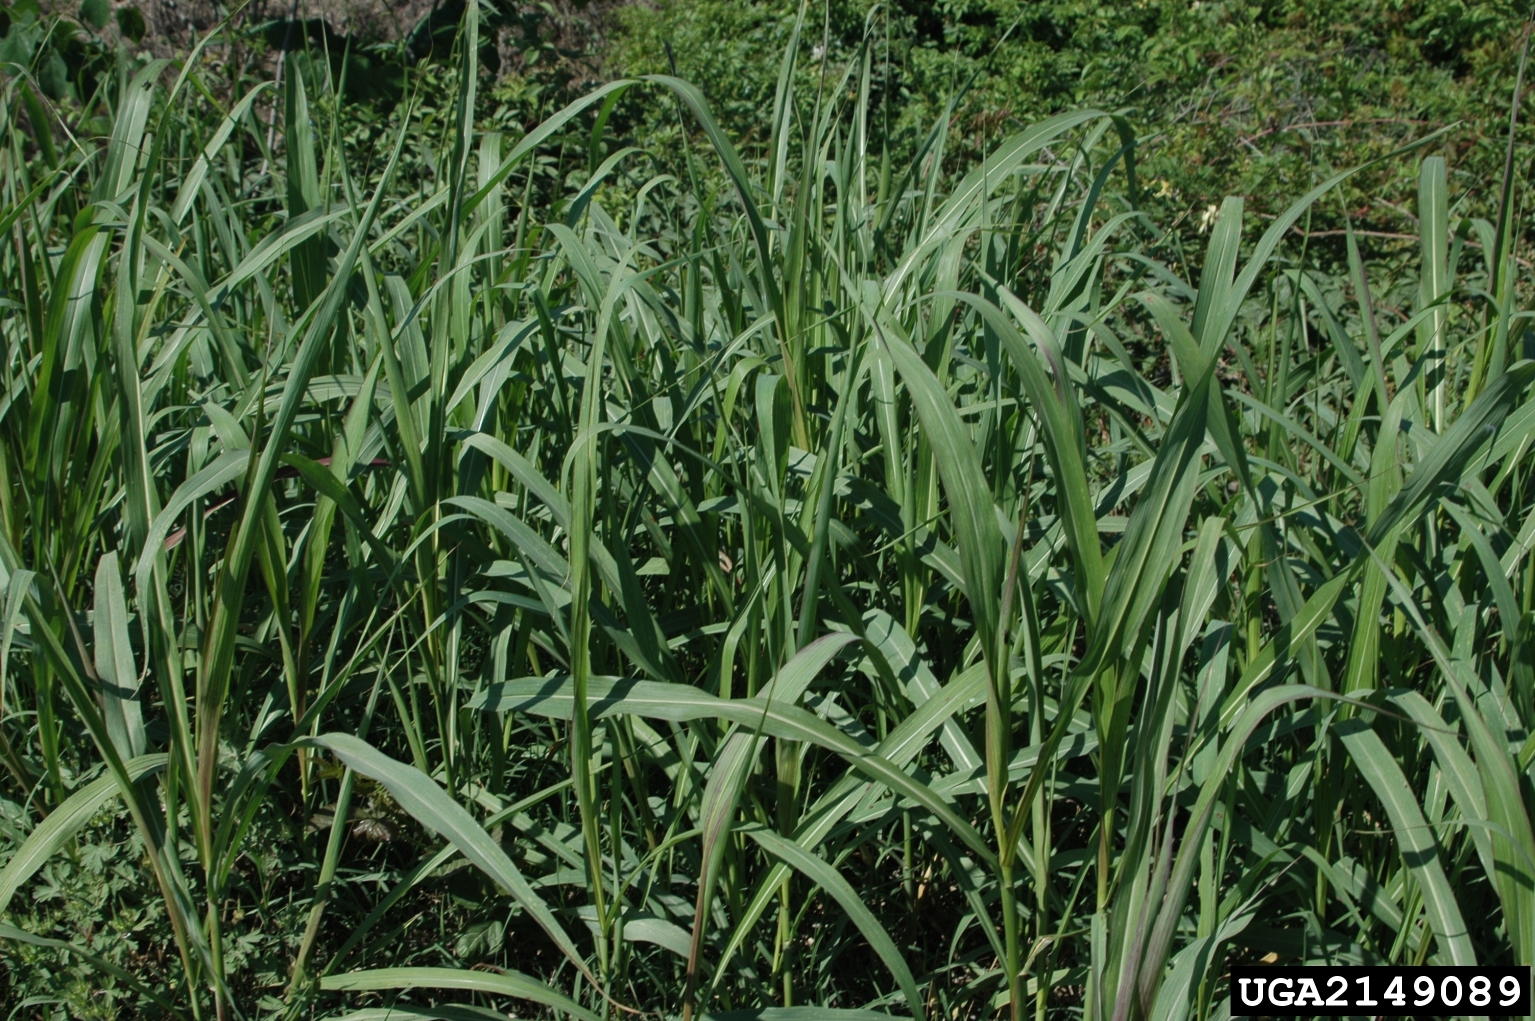 Photograph showing Johnsongrass plants.